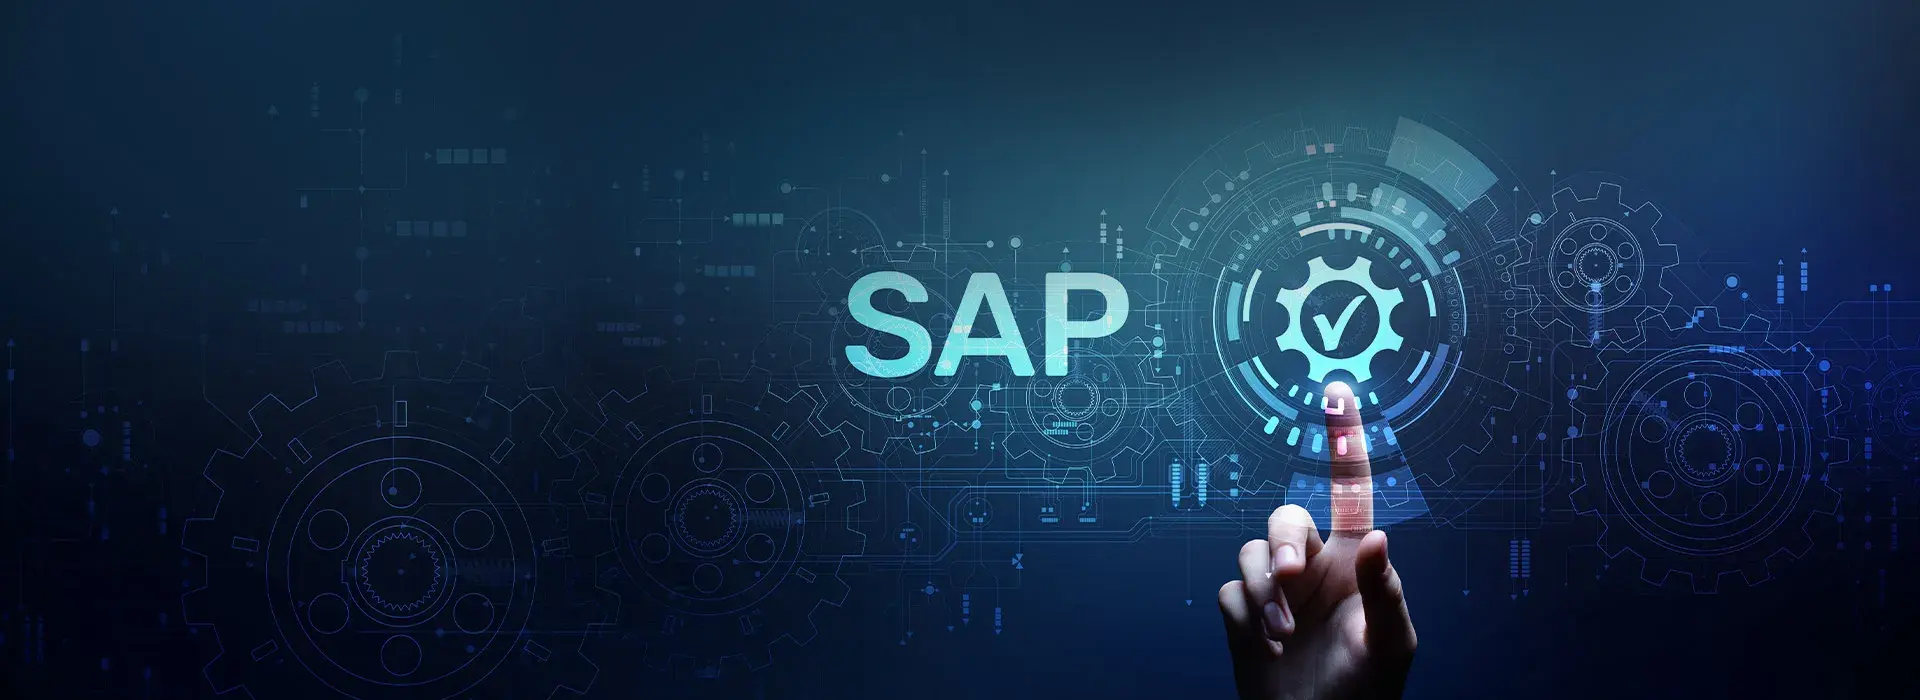 SAP Managed Services